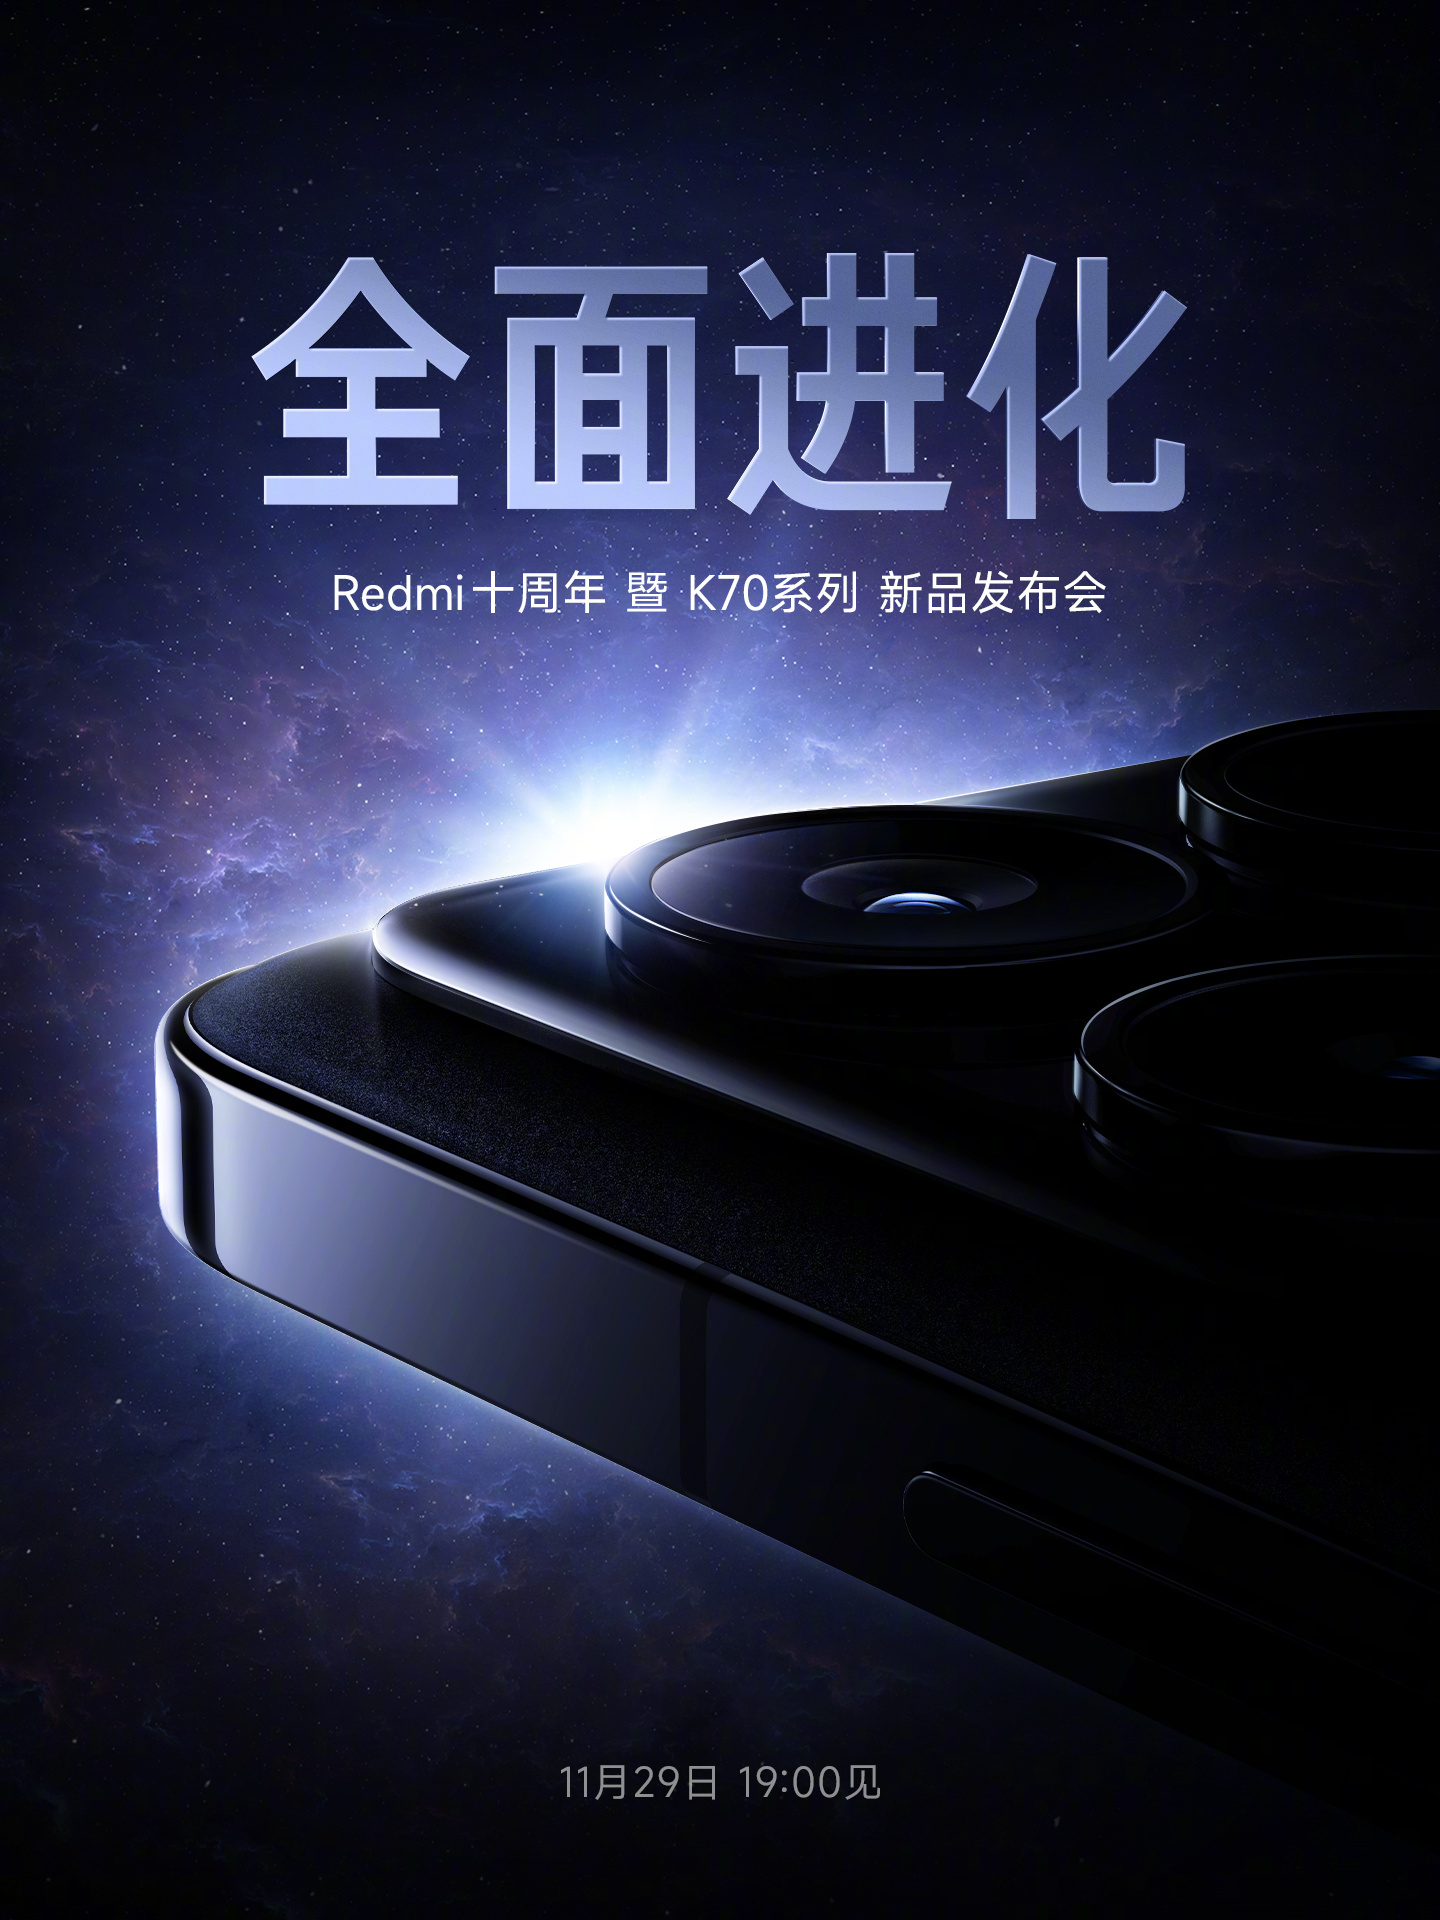 Redmi K70e K70 K70 Pro All Set To Launch On November 29 Gizmochina 2590